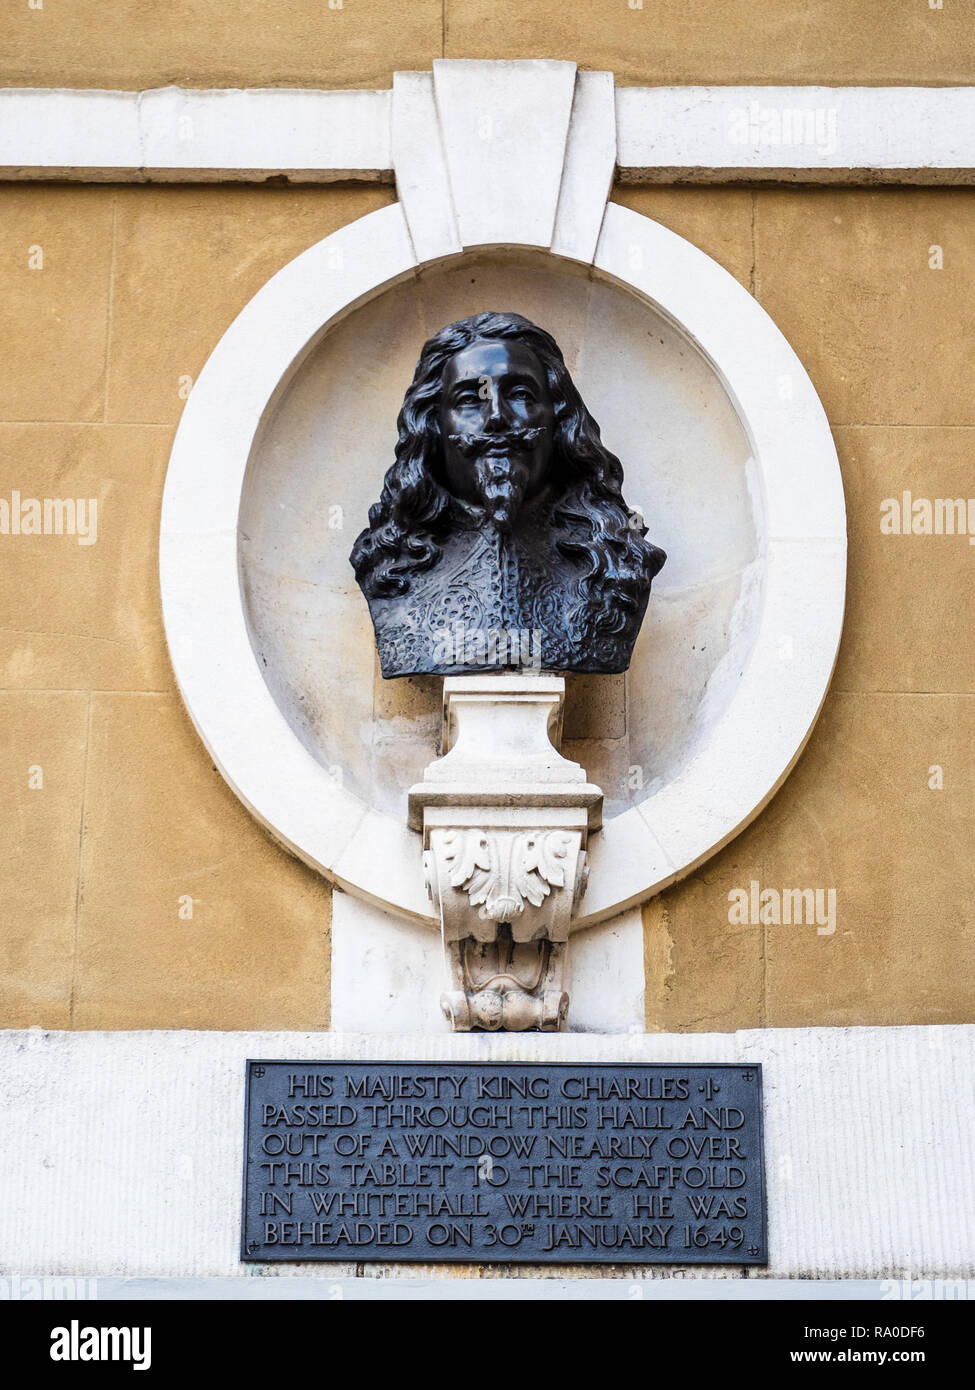 Estatua del rey Charles I busto Banqueting House de Londres, el rey Carlos I (1600-1649), fue ejecutado el 30 de enero de 1649 delante de Banqueting House de Whitehall Foto de stock